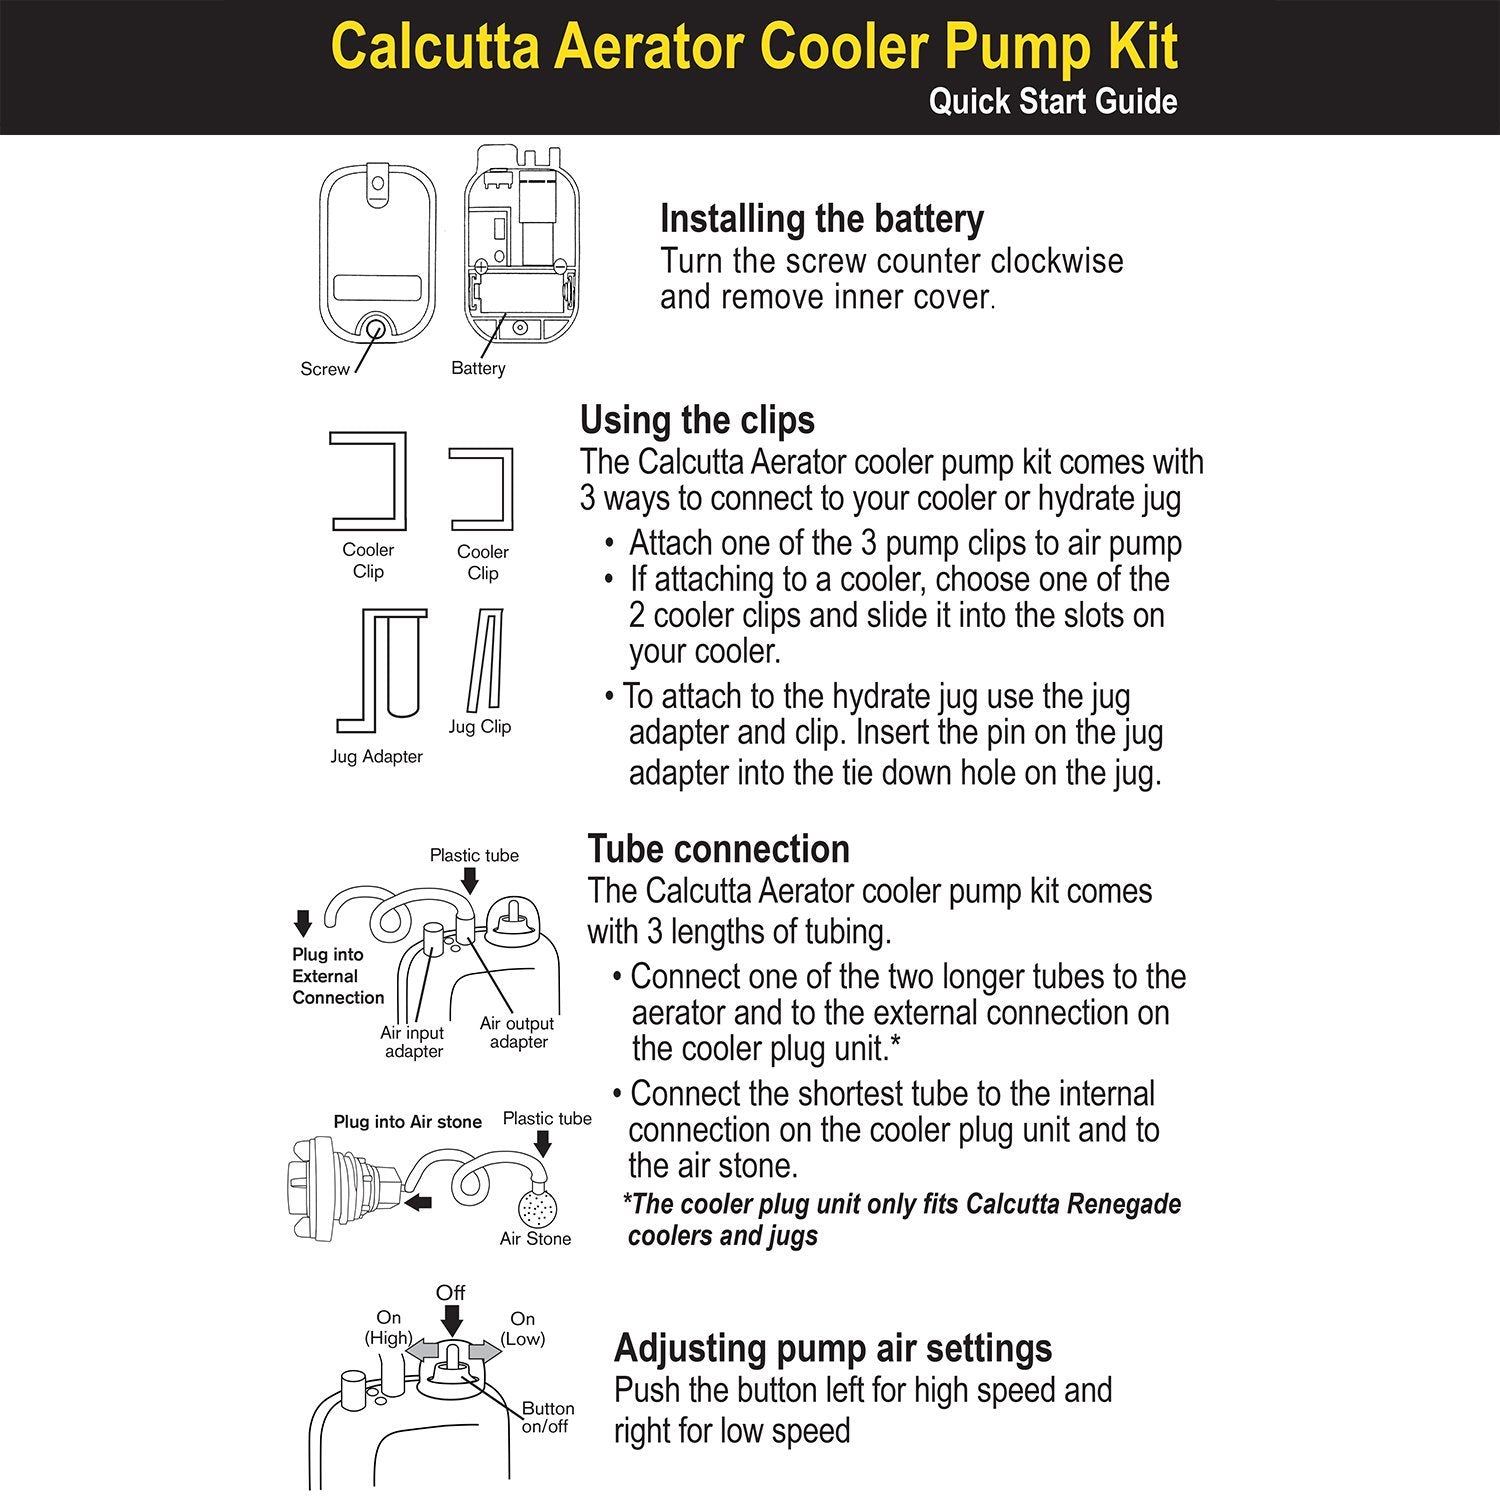 Calcutta aerator cooler pump kit instructions